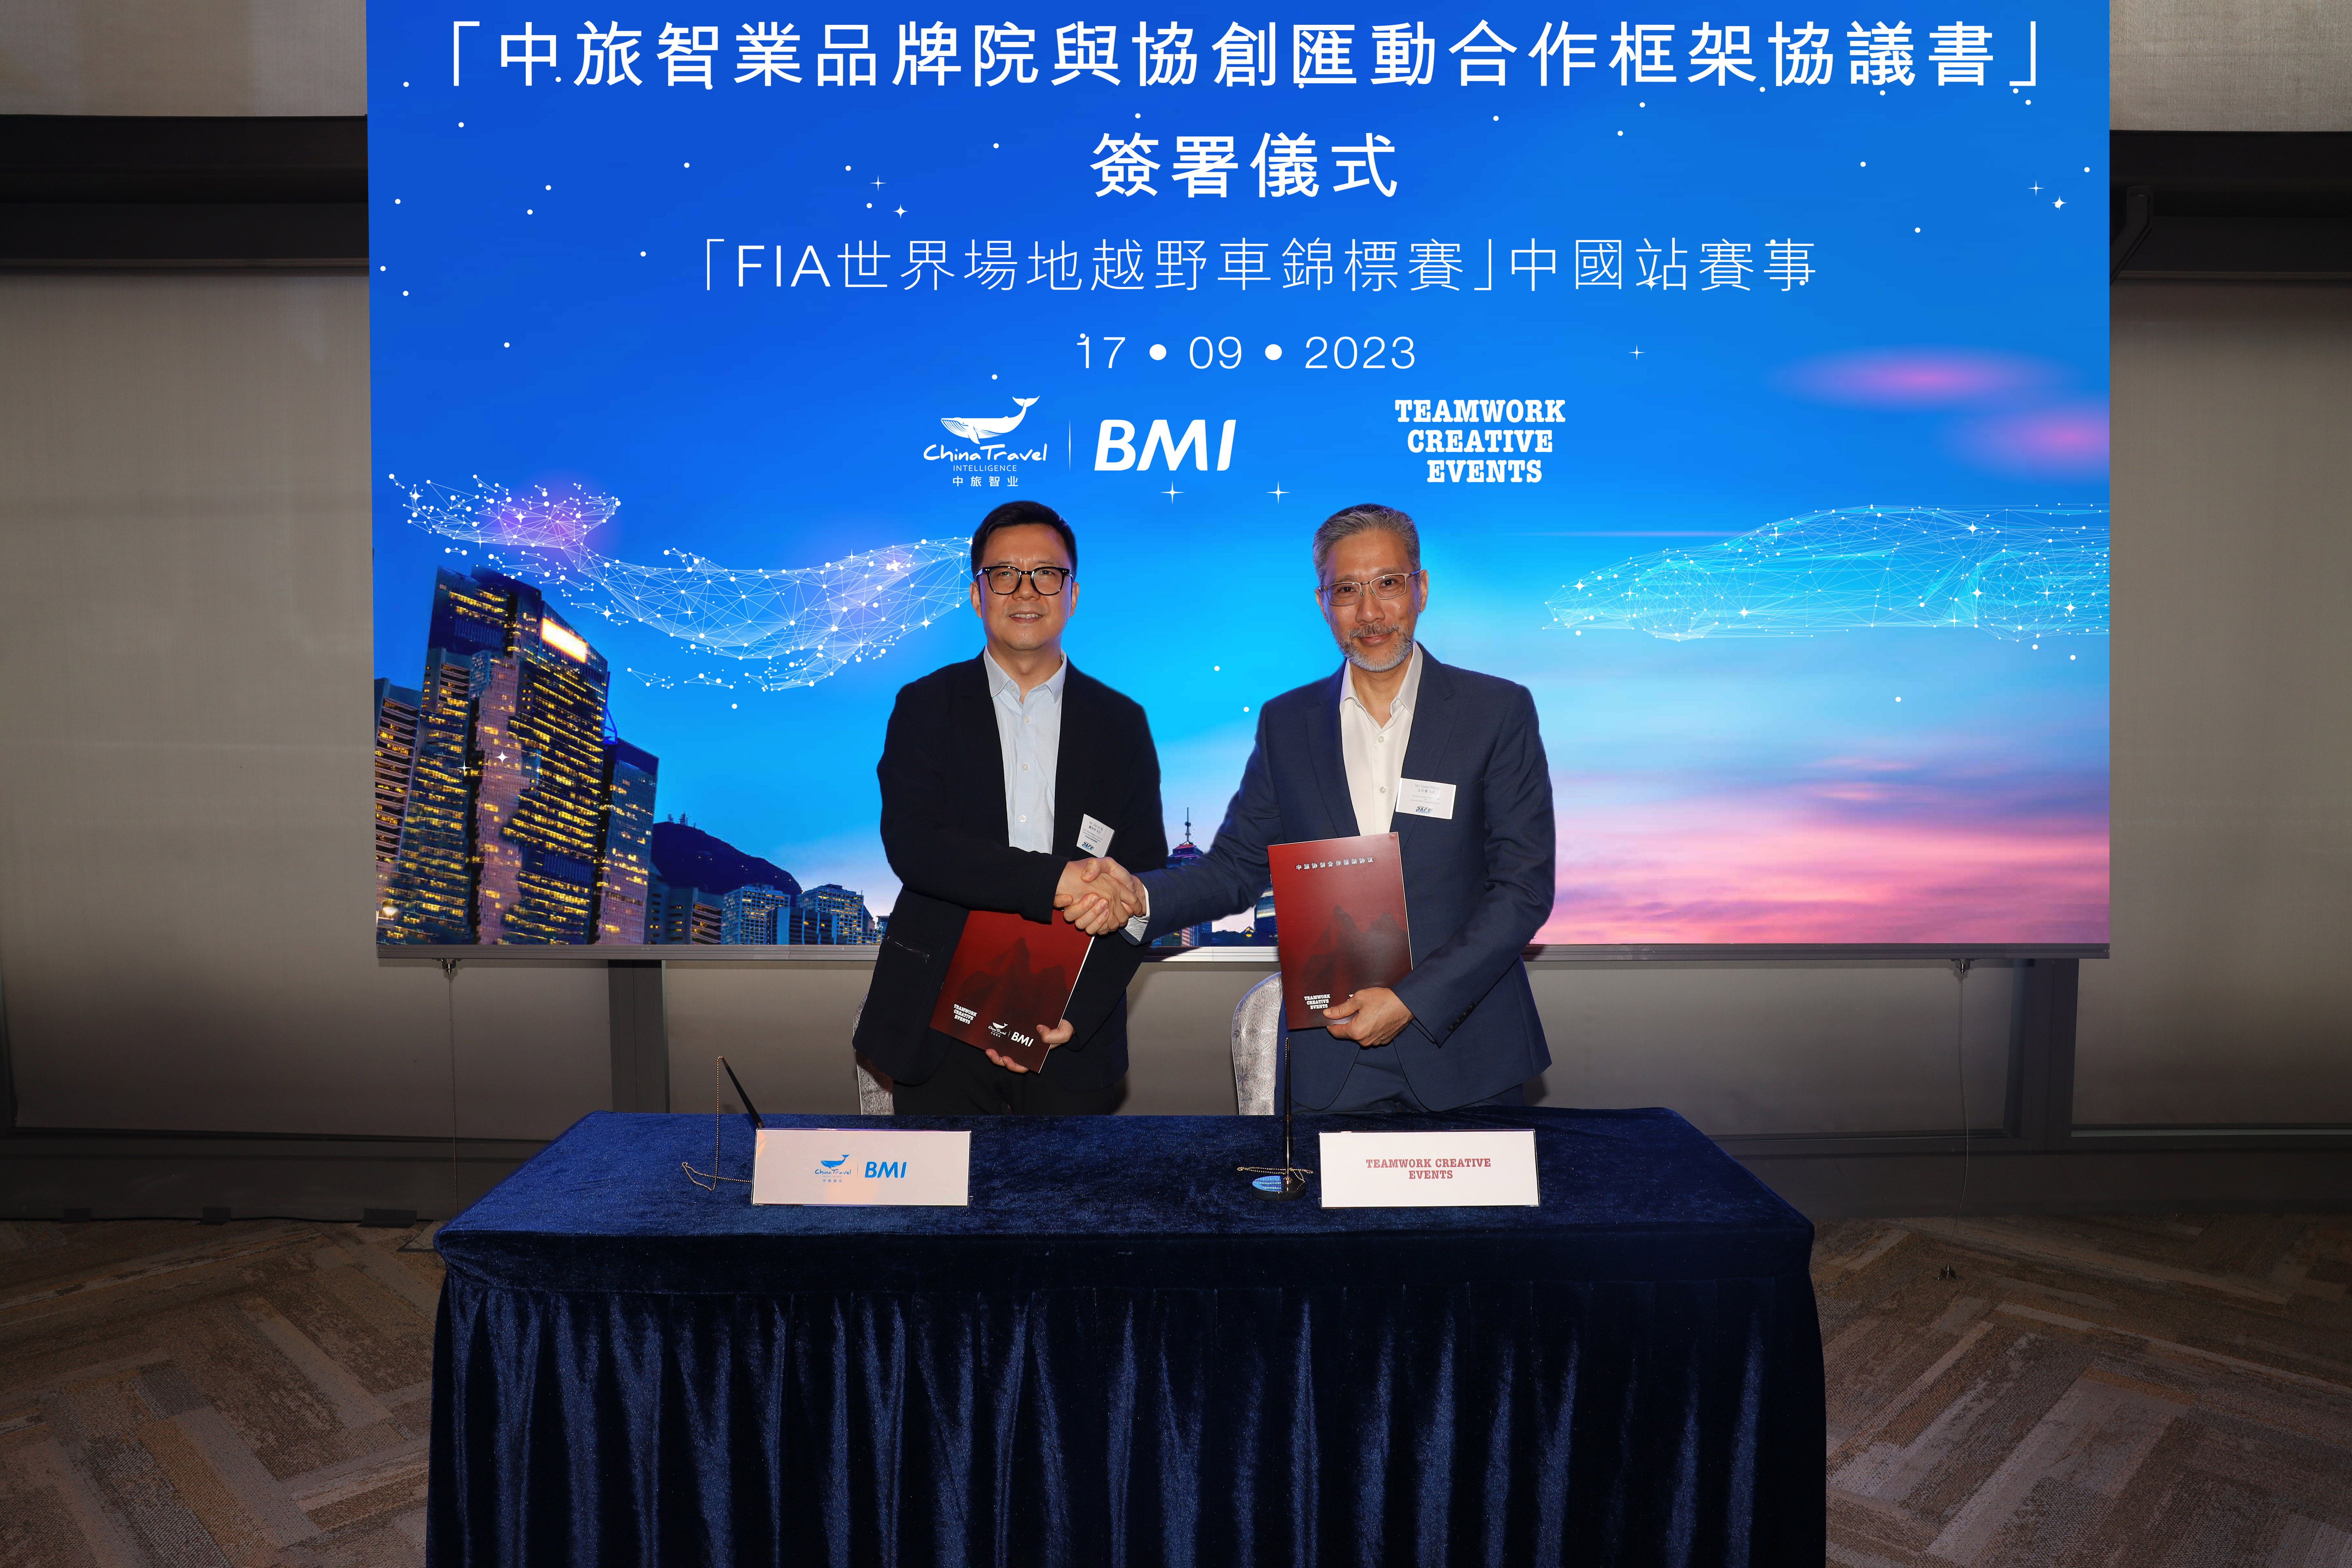 Mr Dai Linxu, President of China Travel Intelligence Brand Marketing Institute (